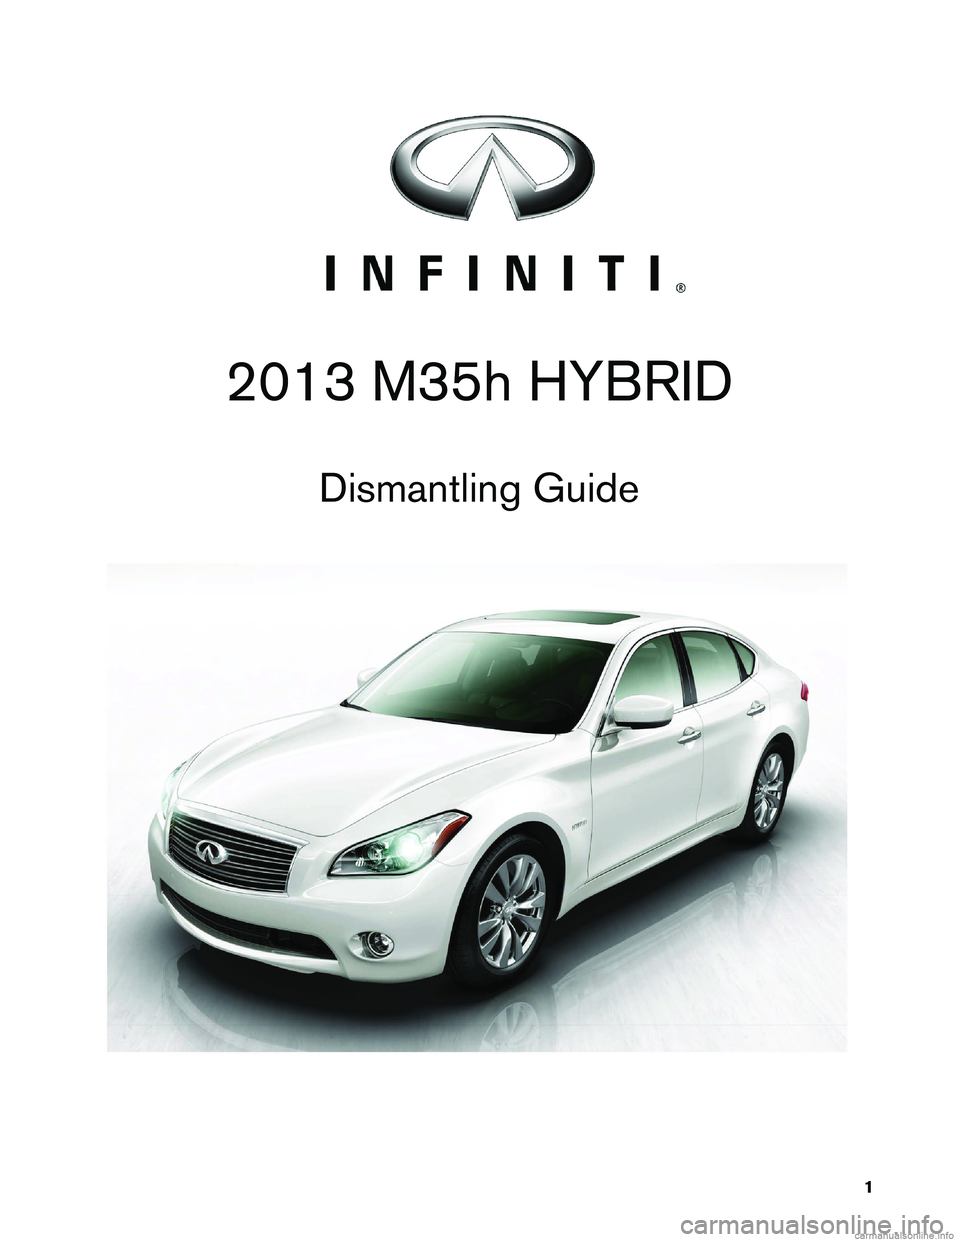 INFINITI M HYBRID 2013  Dismantling Guide 